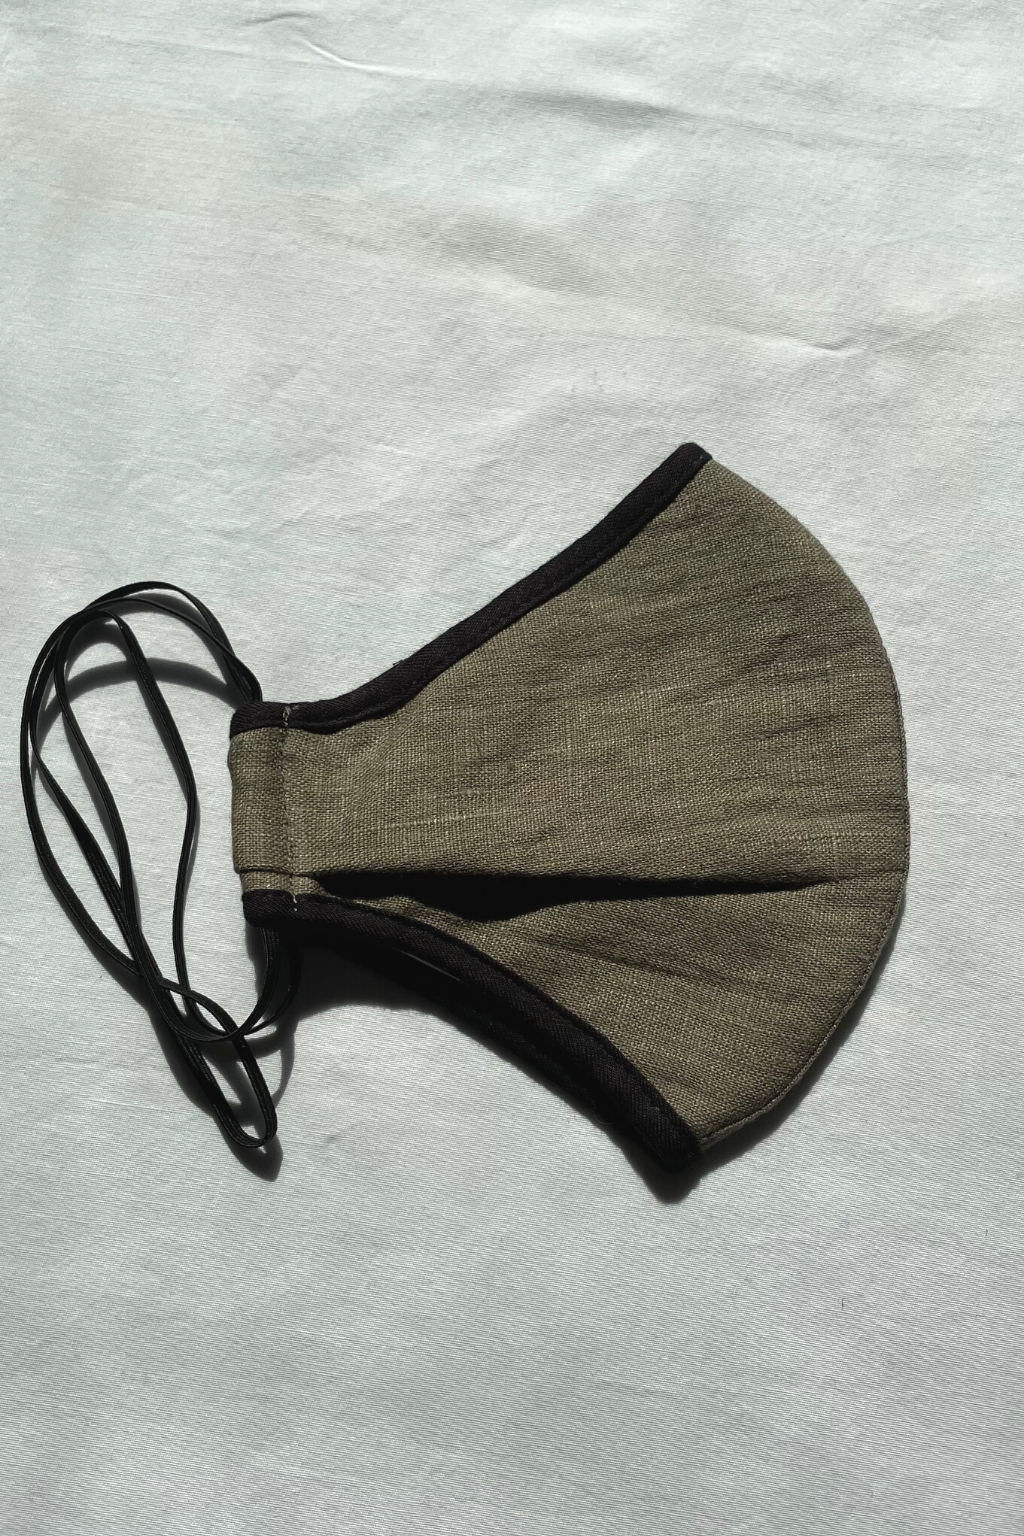 KOKOON Covid 19 cornovirus Reusable Cloth Masks for Men in Olive Linen